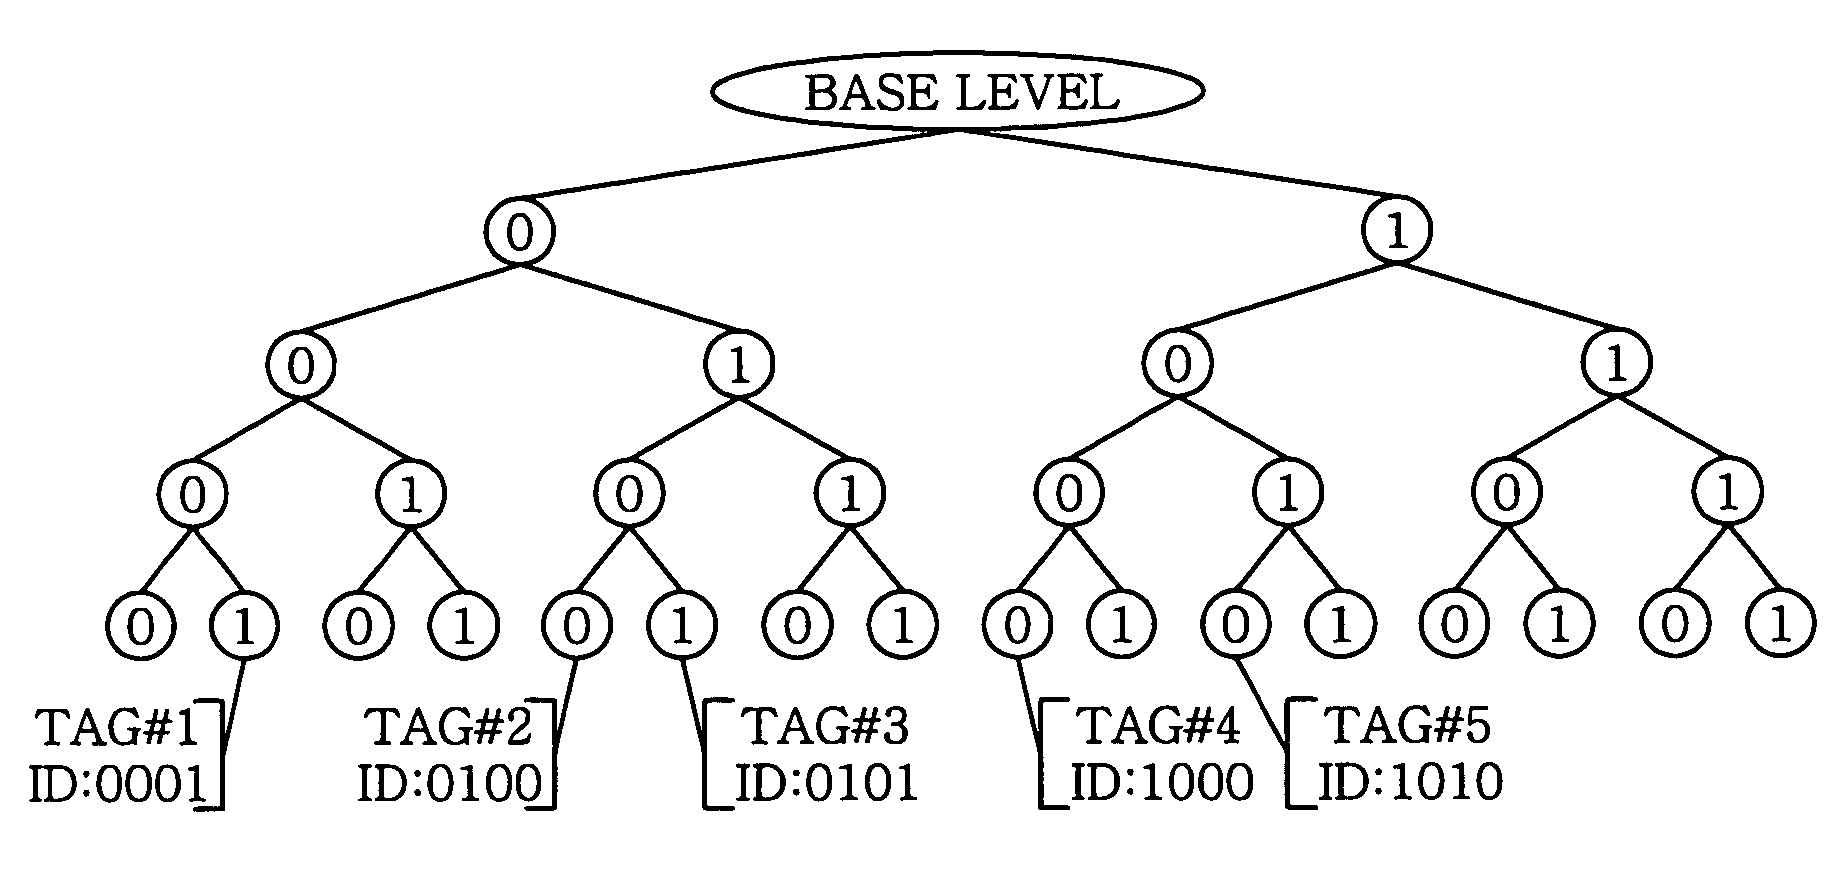 Bi-slot tree based tag identification method in RFID systems